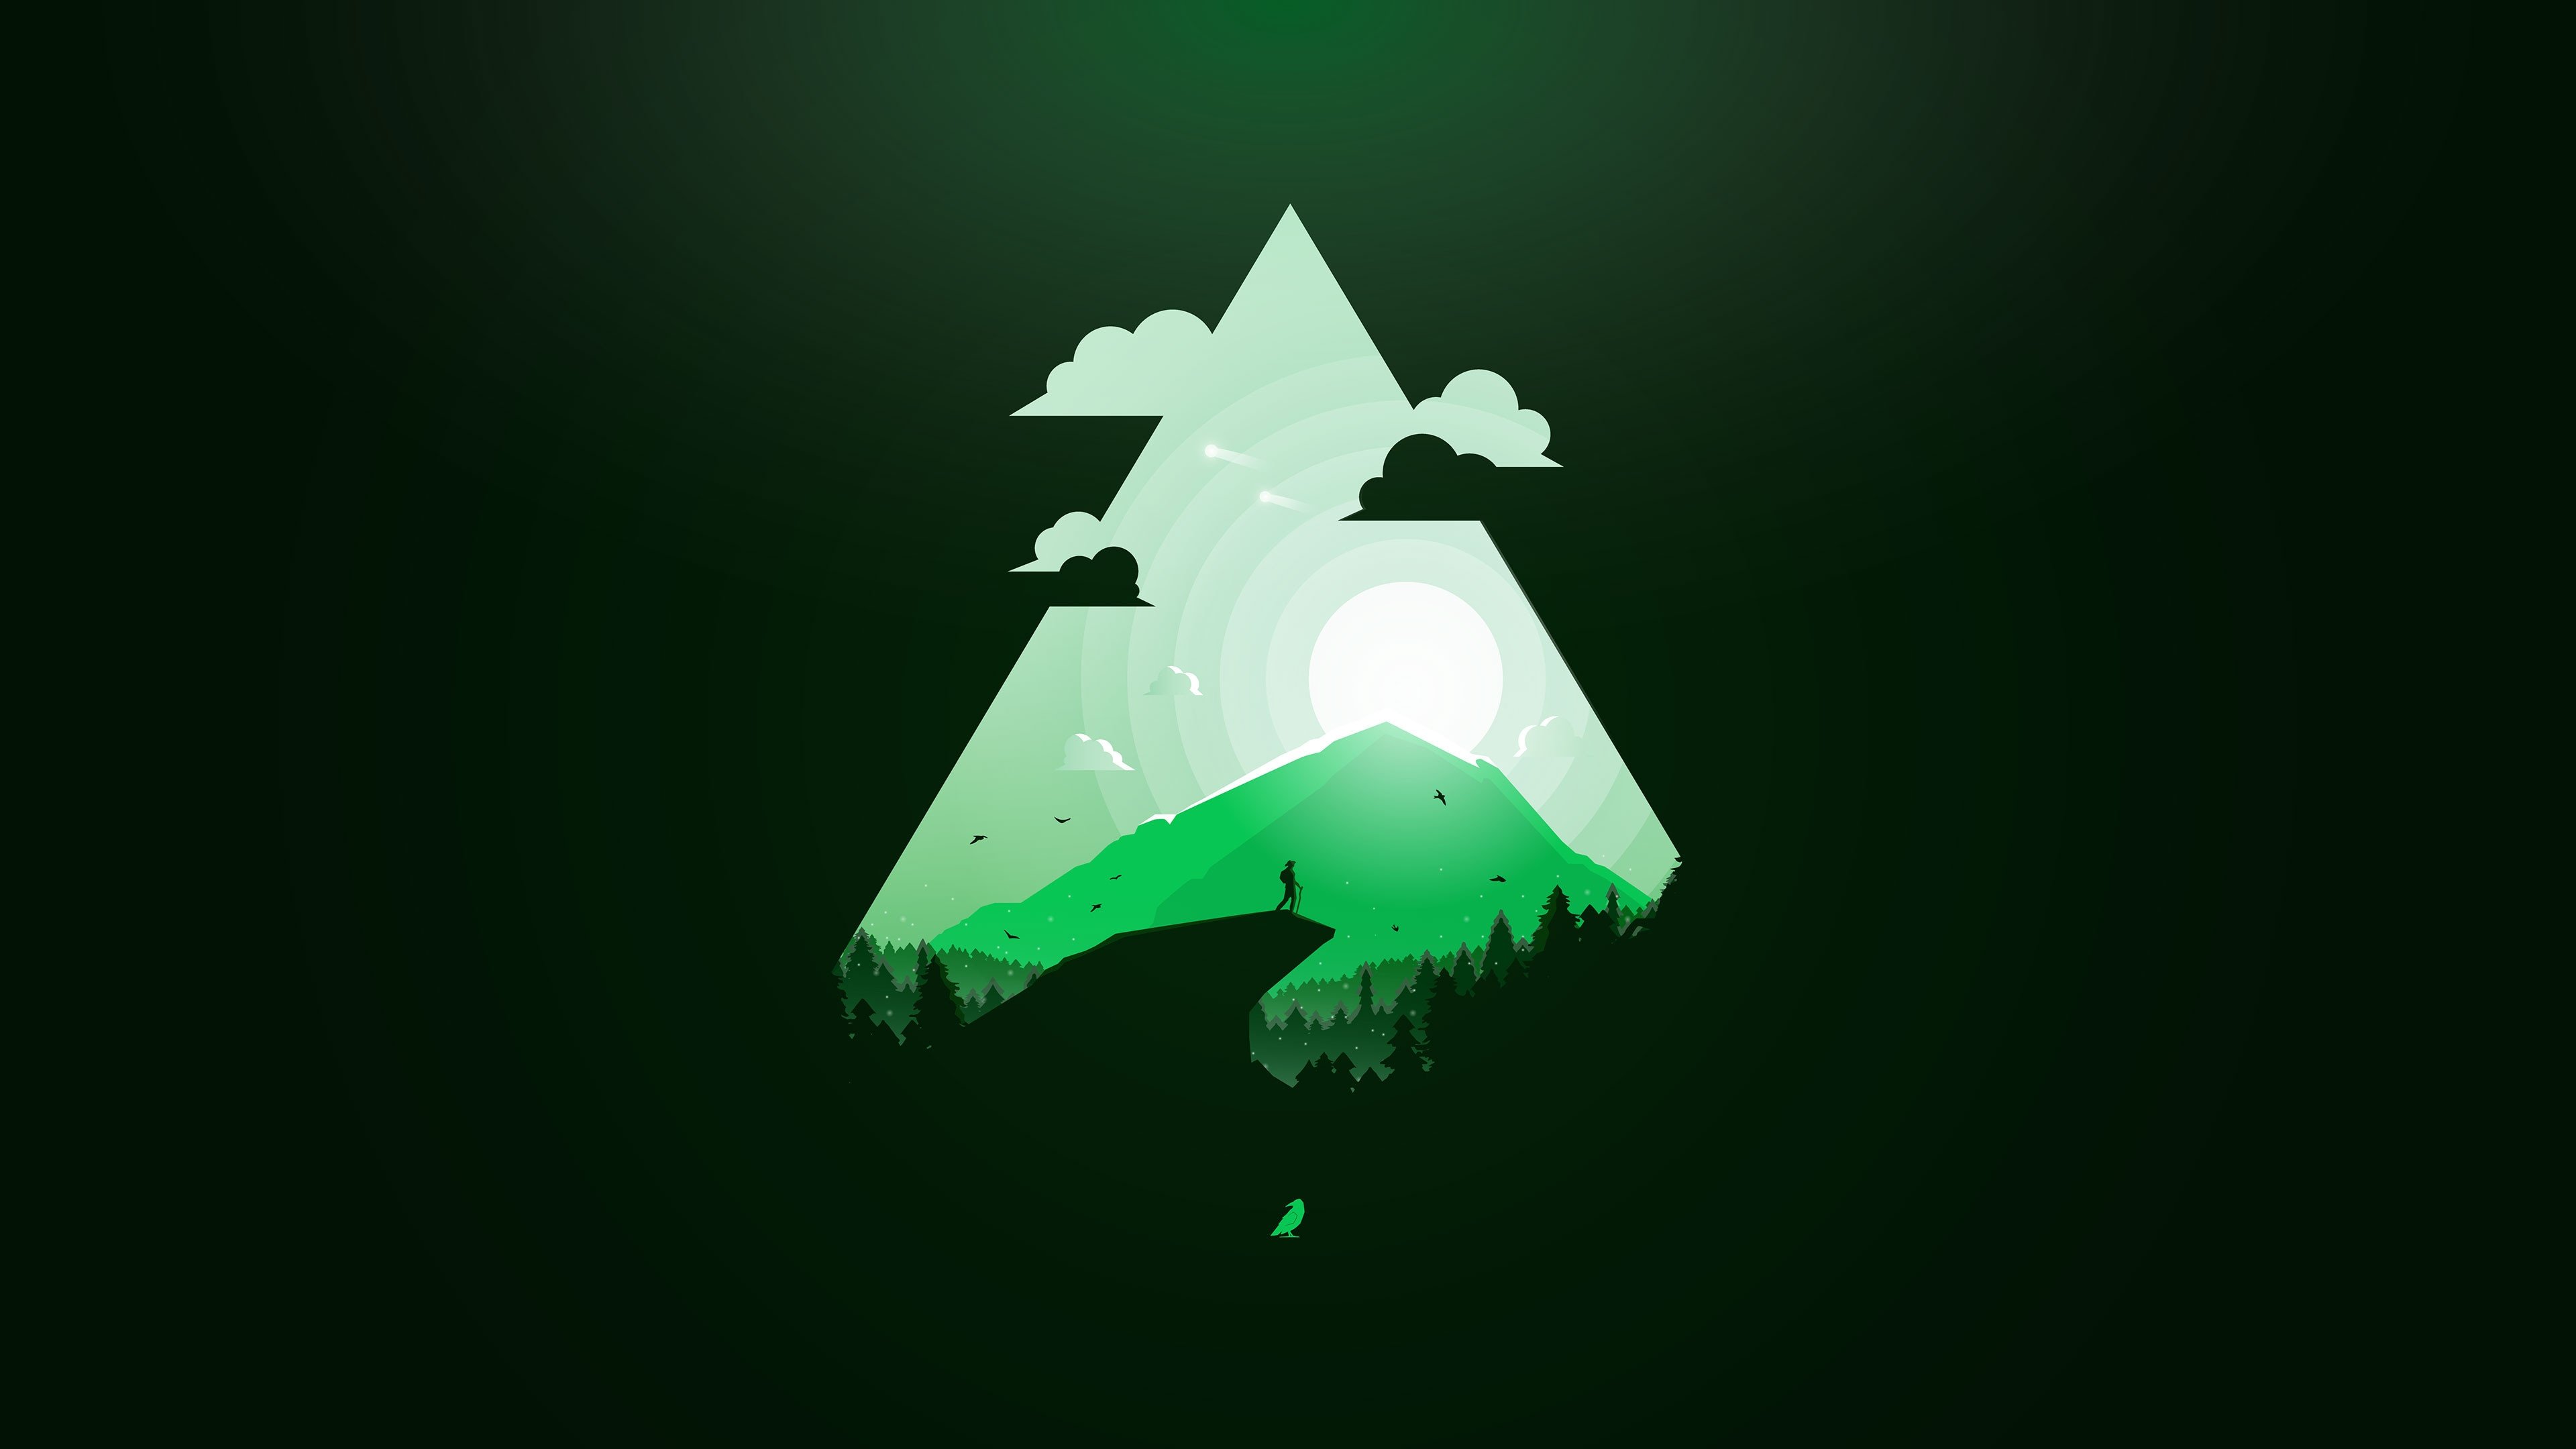 Fondos de pantalla Art landscape mountain forest in triangle